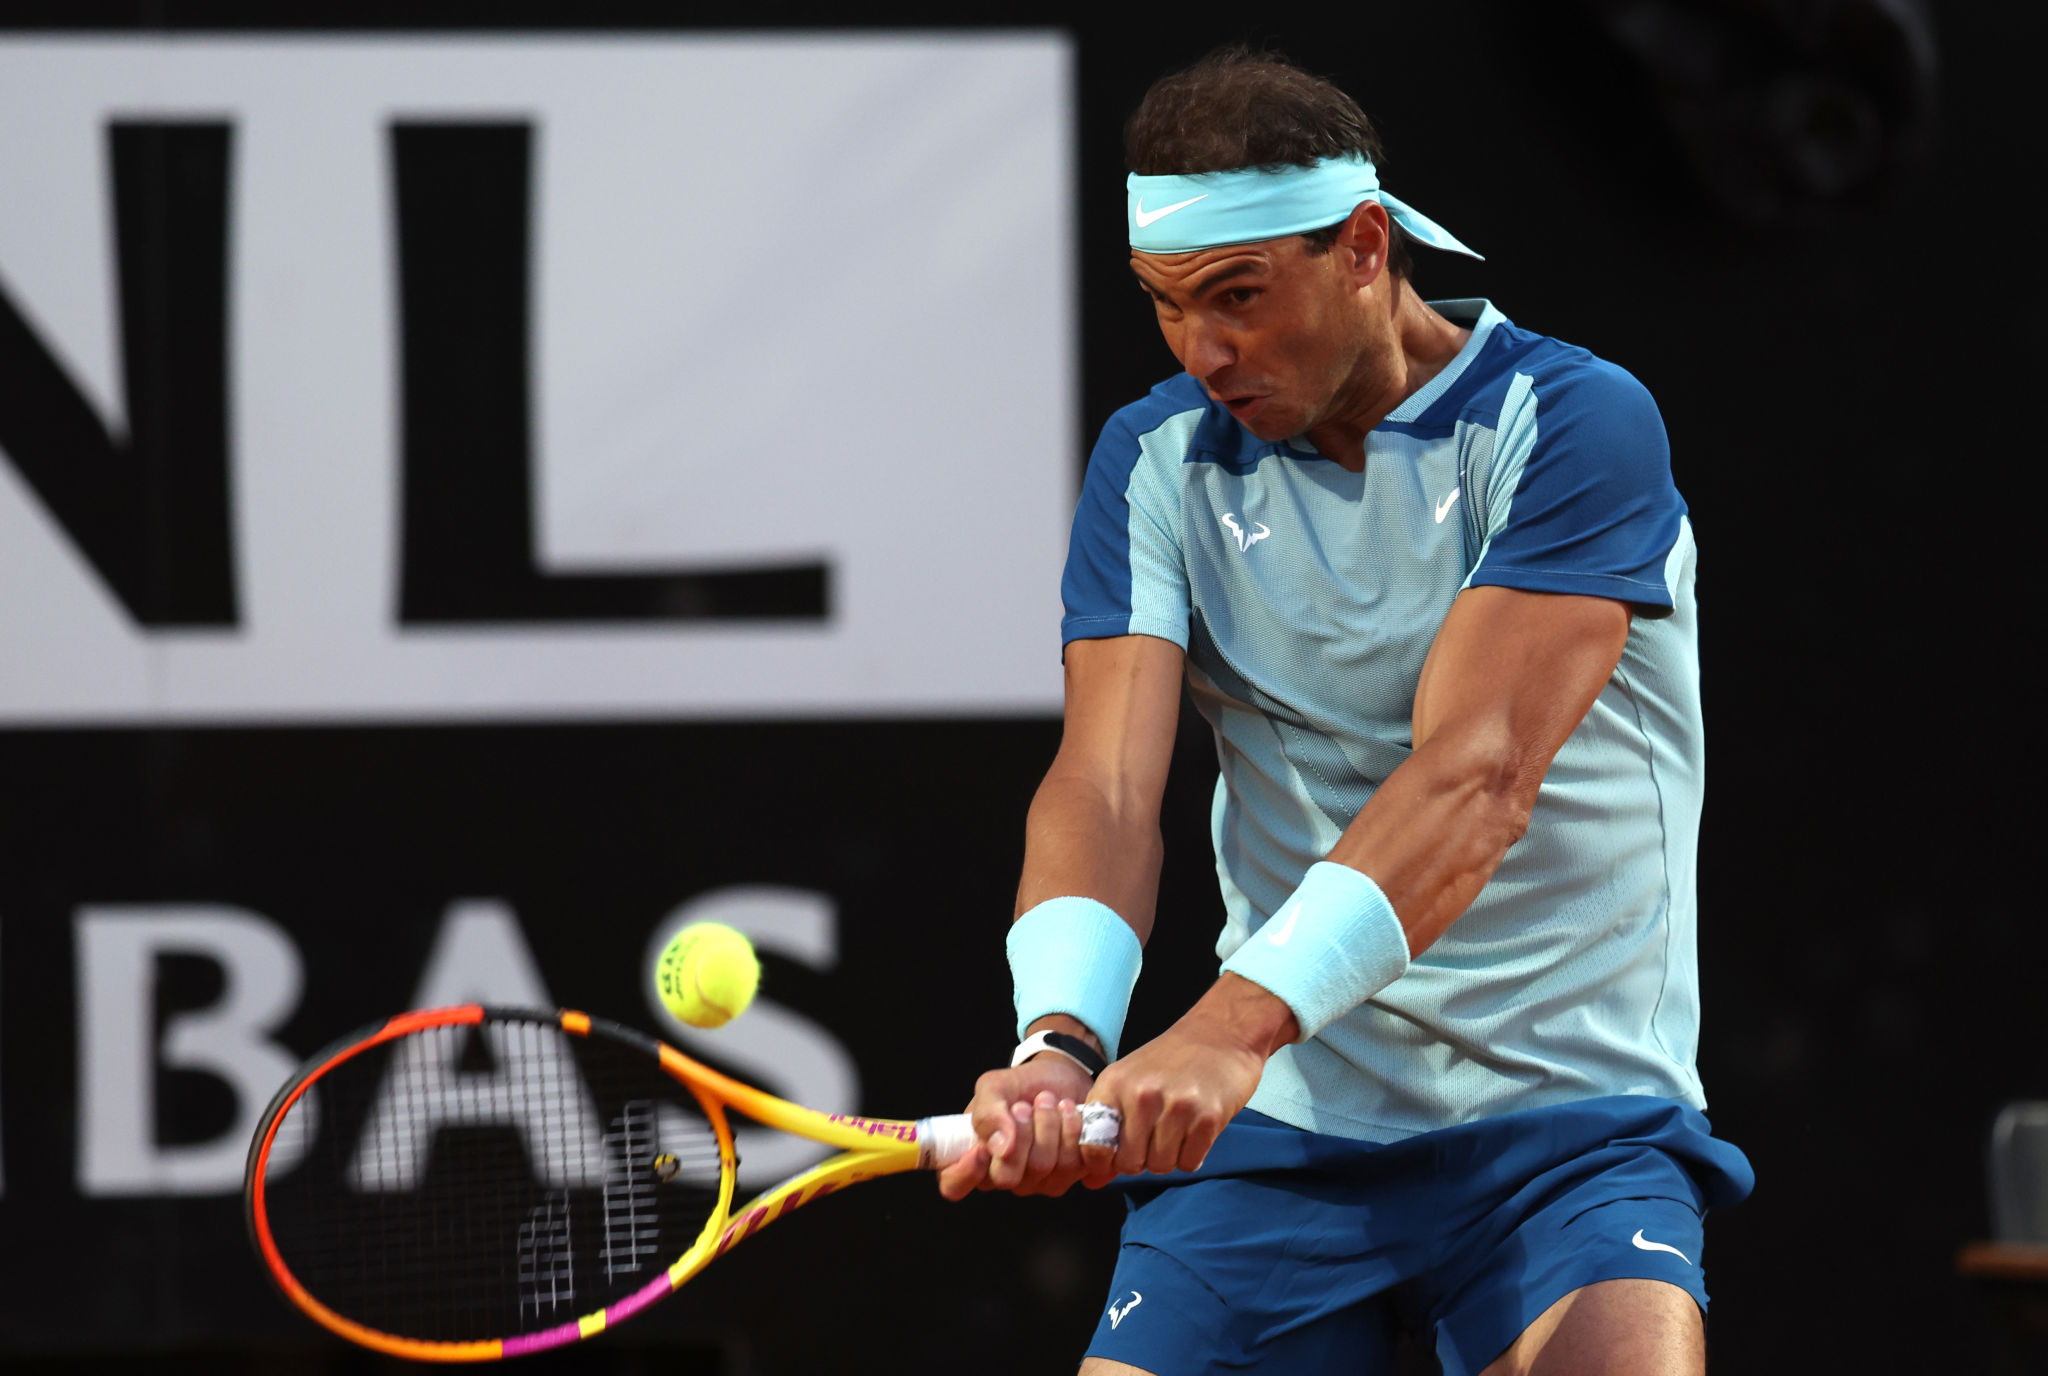 Italian Open LIVE: Denis Shapovalov clinches upset victory over Rafael Nadal in three sets to move into Italian Open quarterfinals